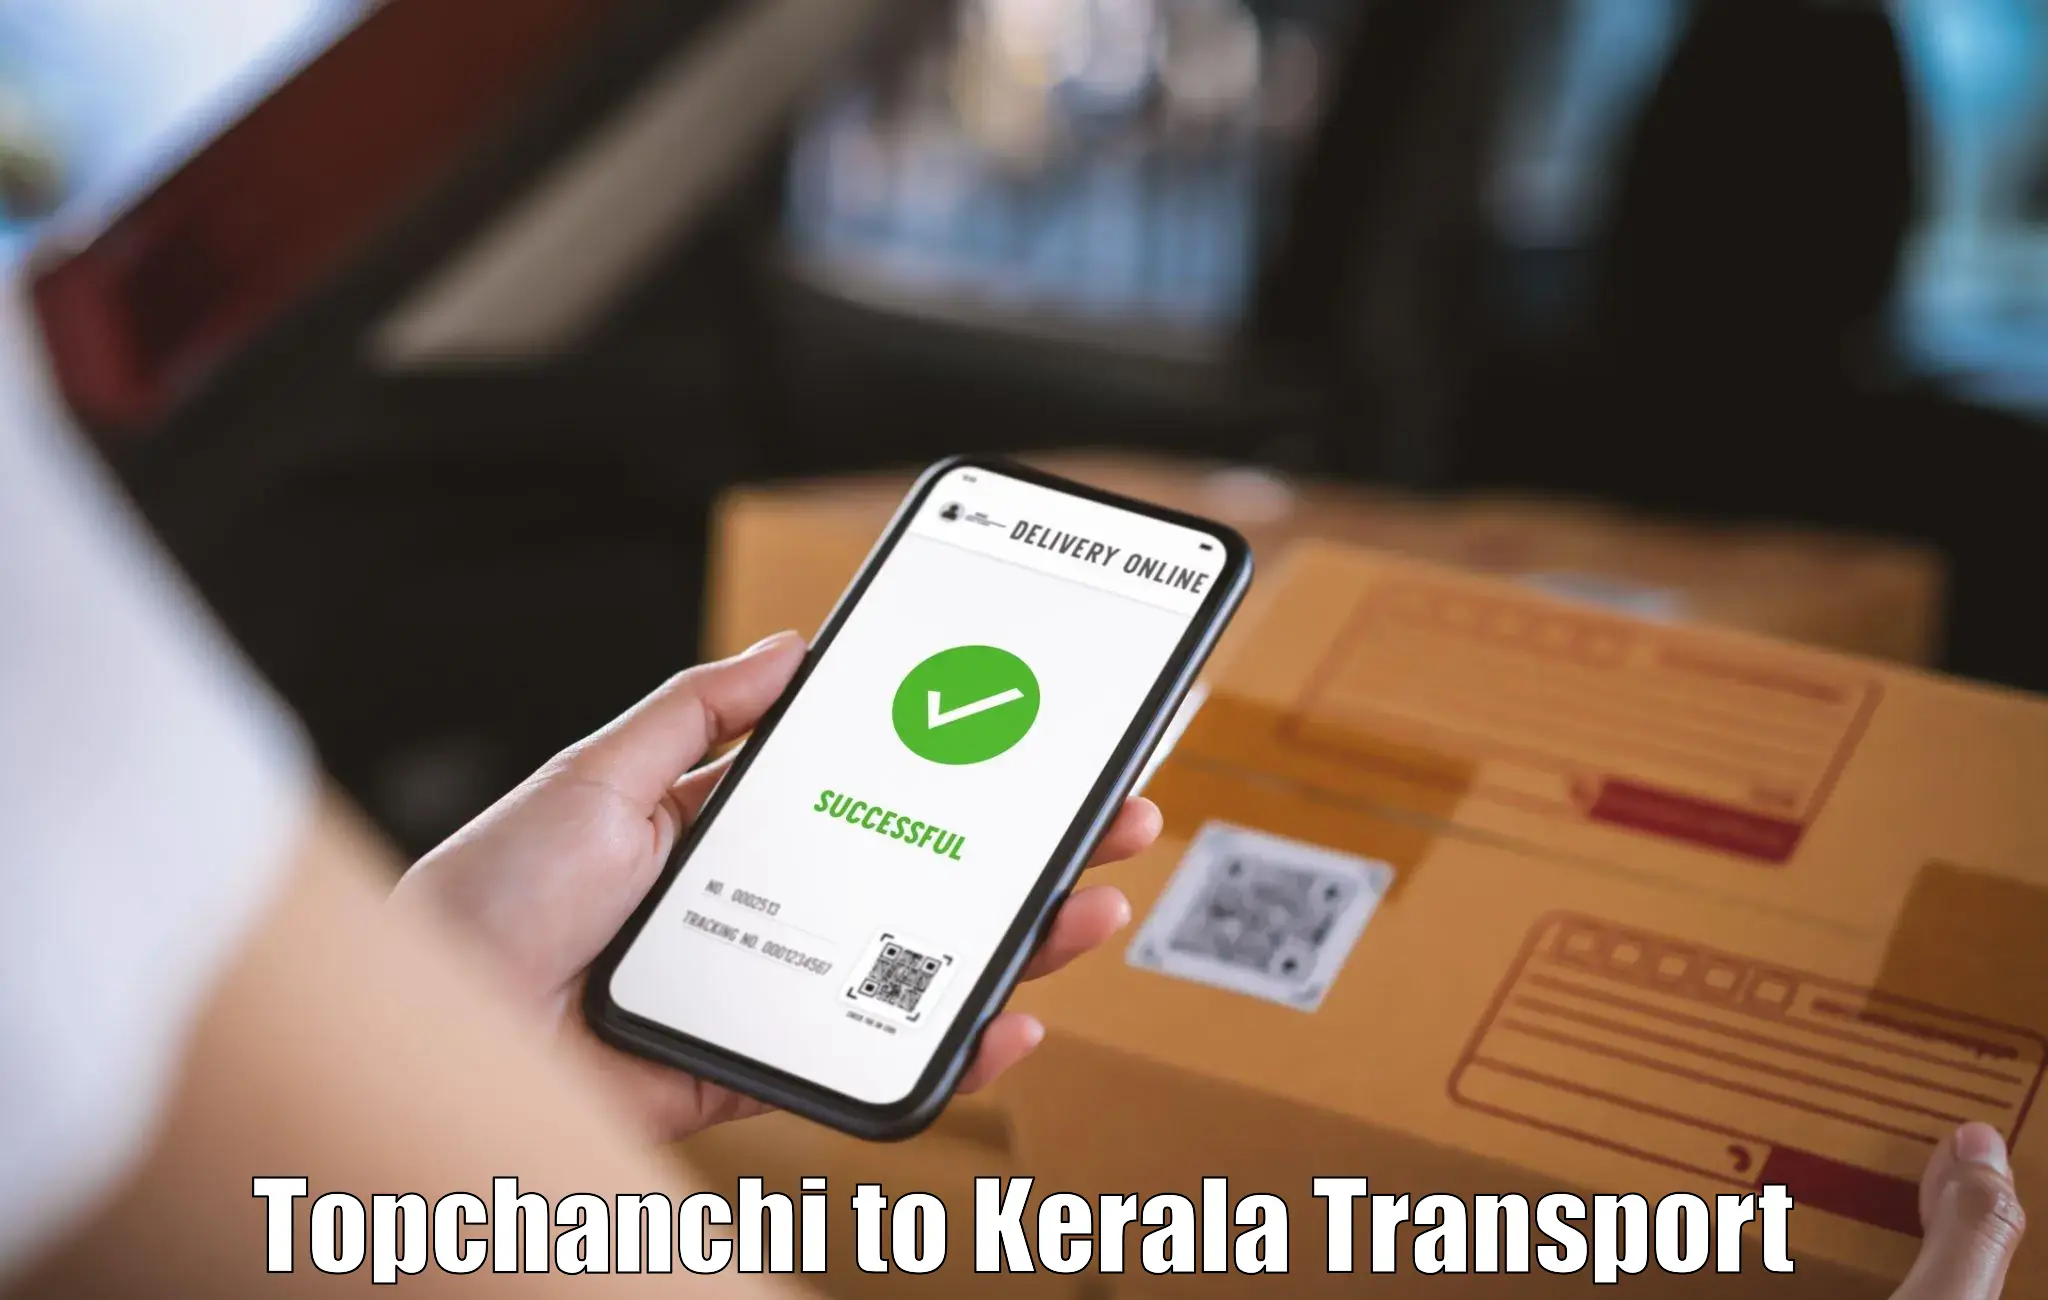 Nearby transport service Topchanchi to Palakkad